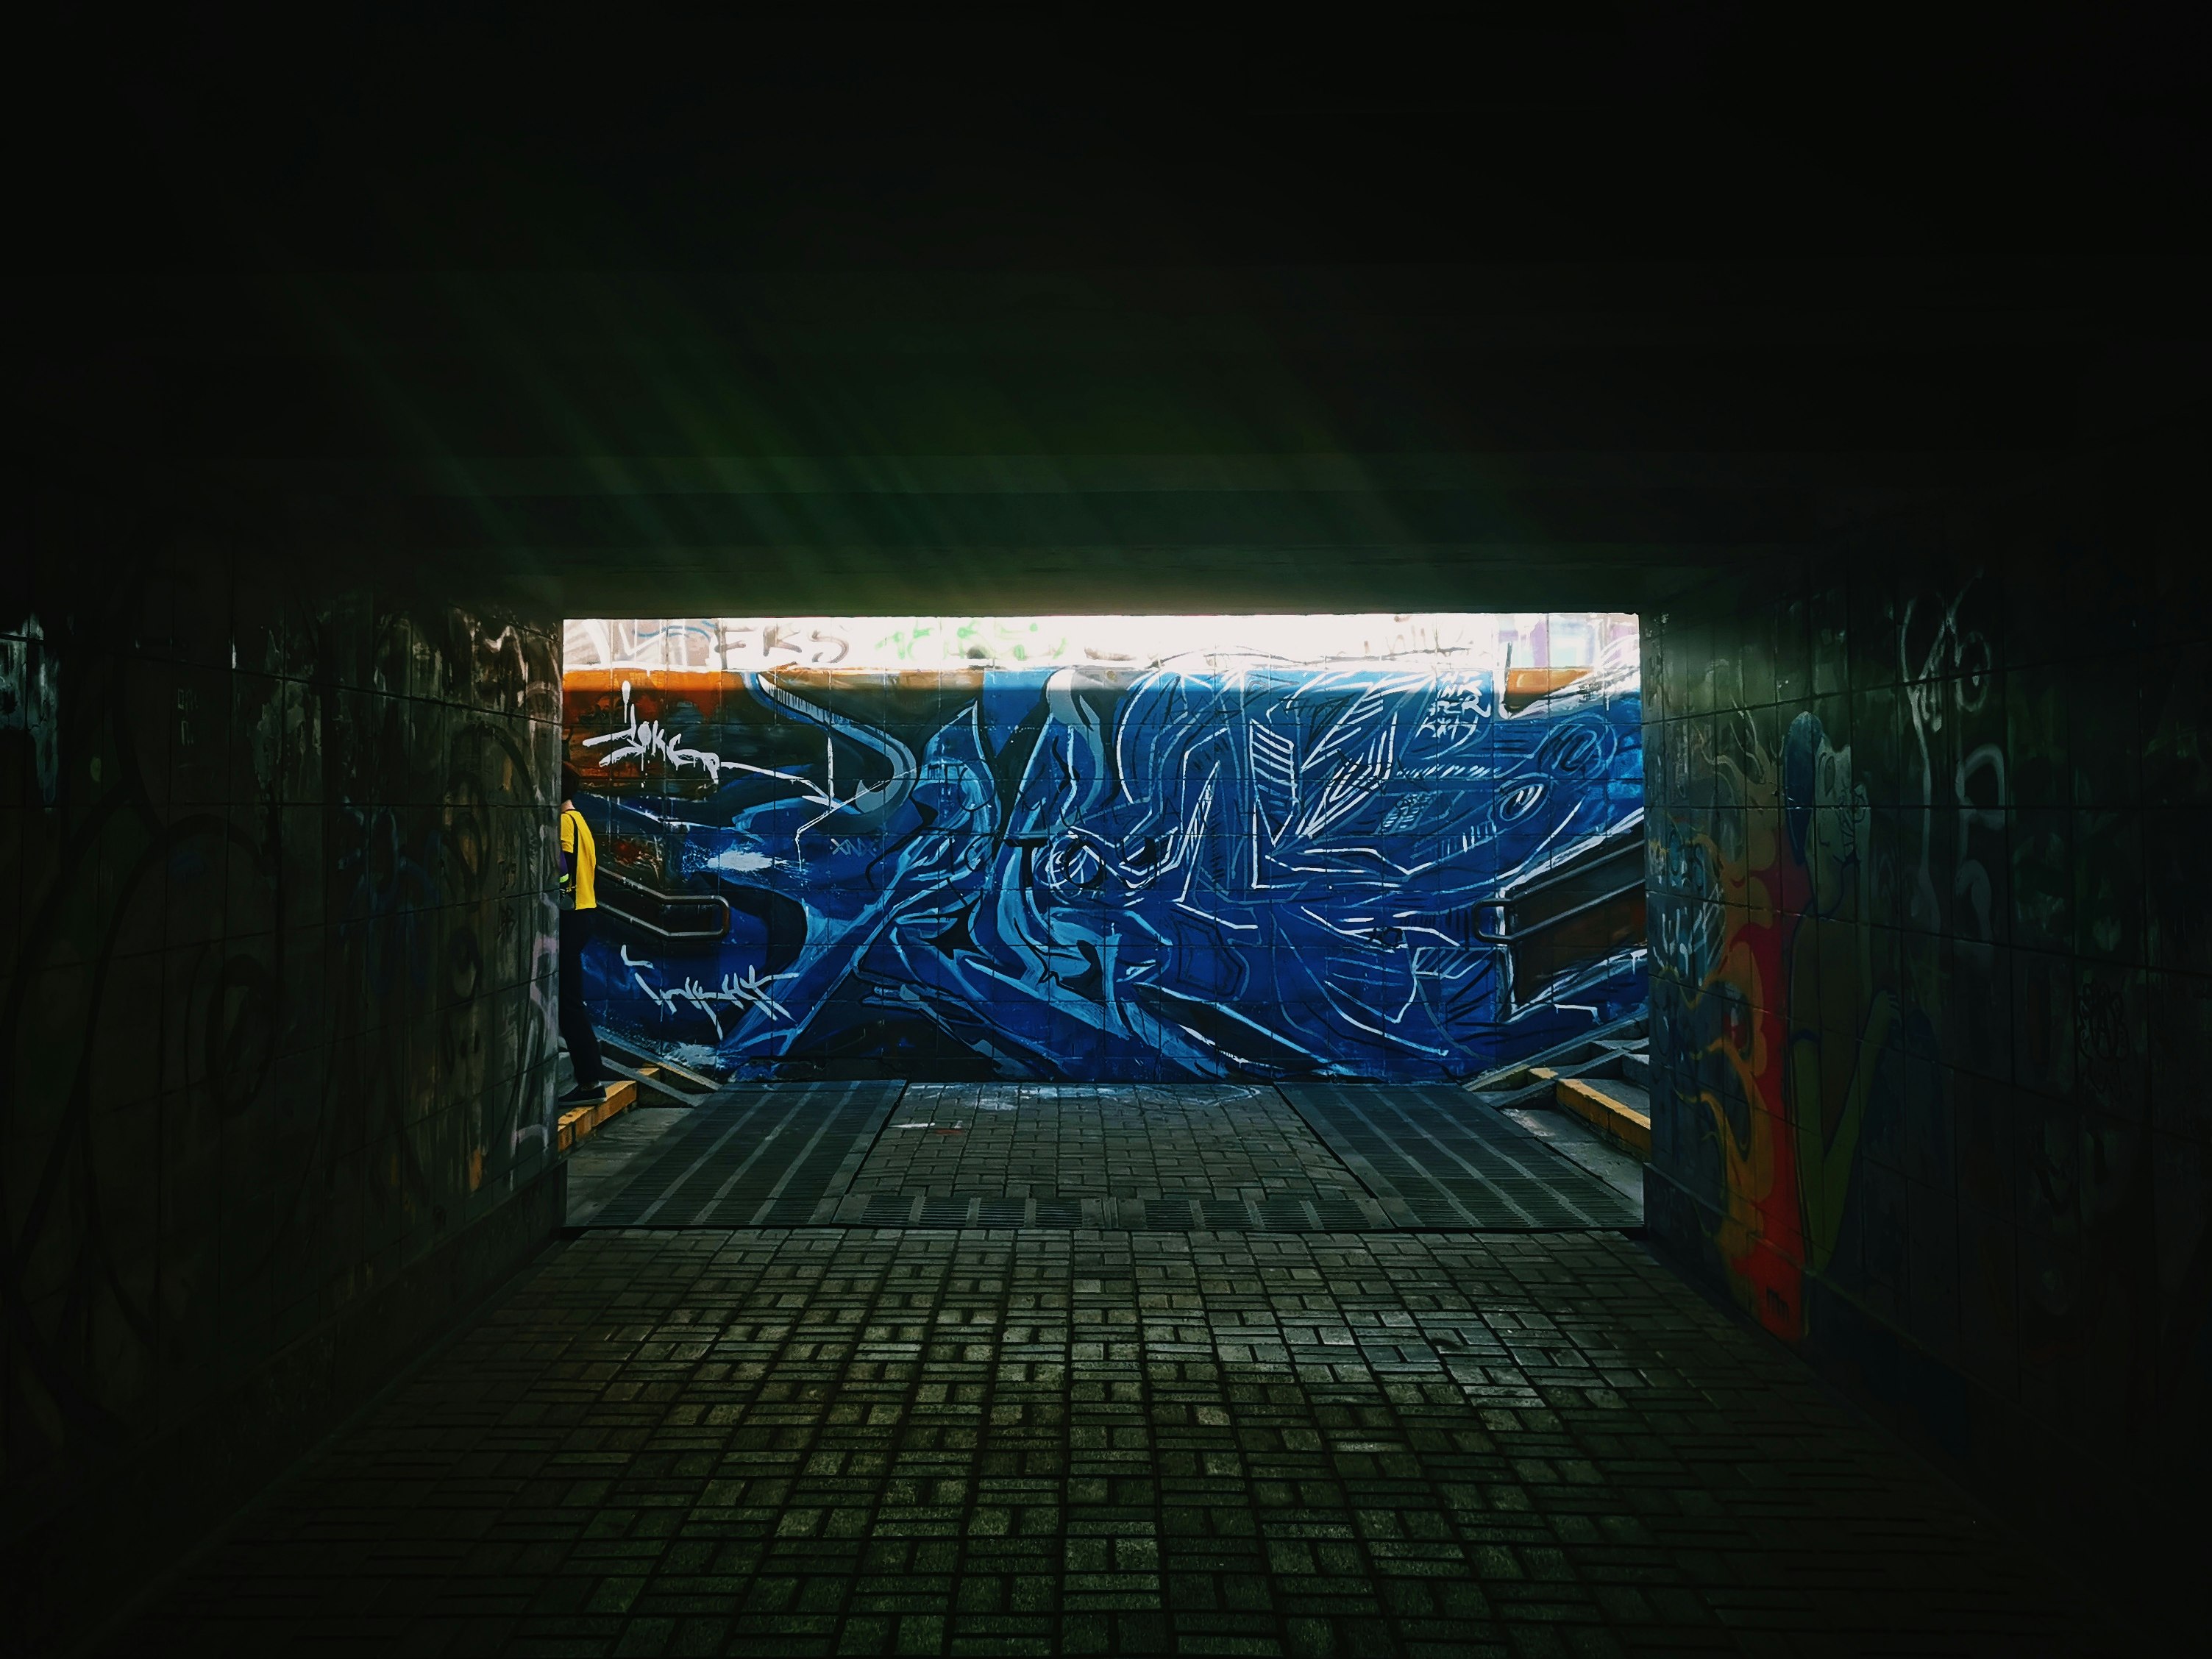 blue and white graffiti on wall